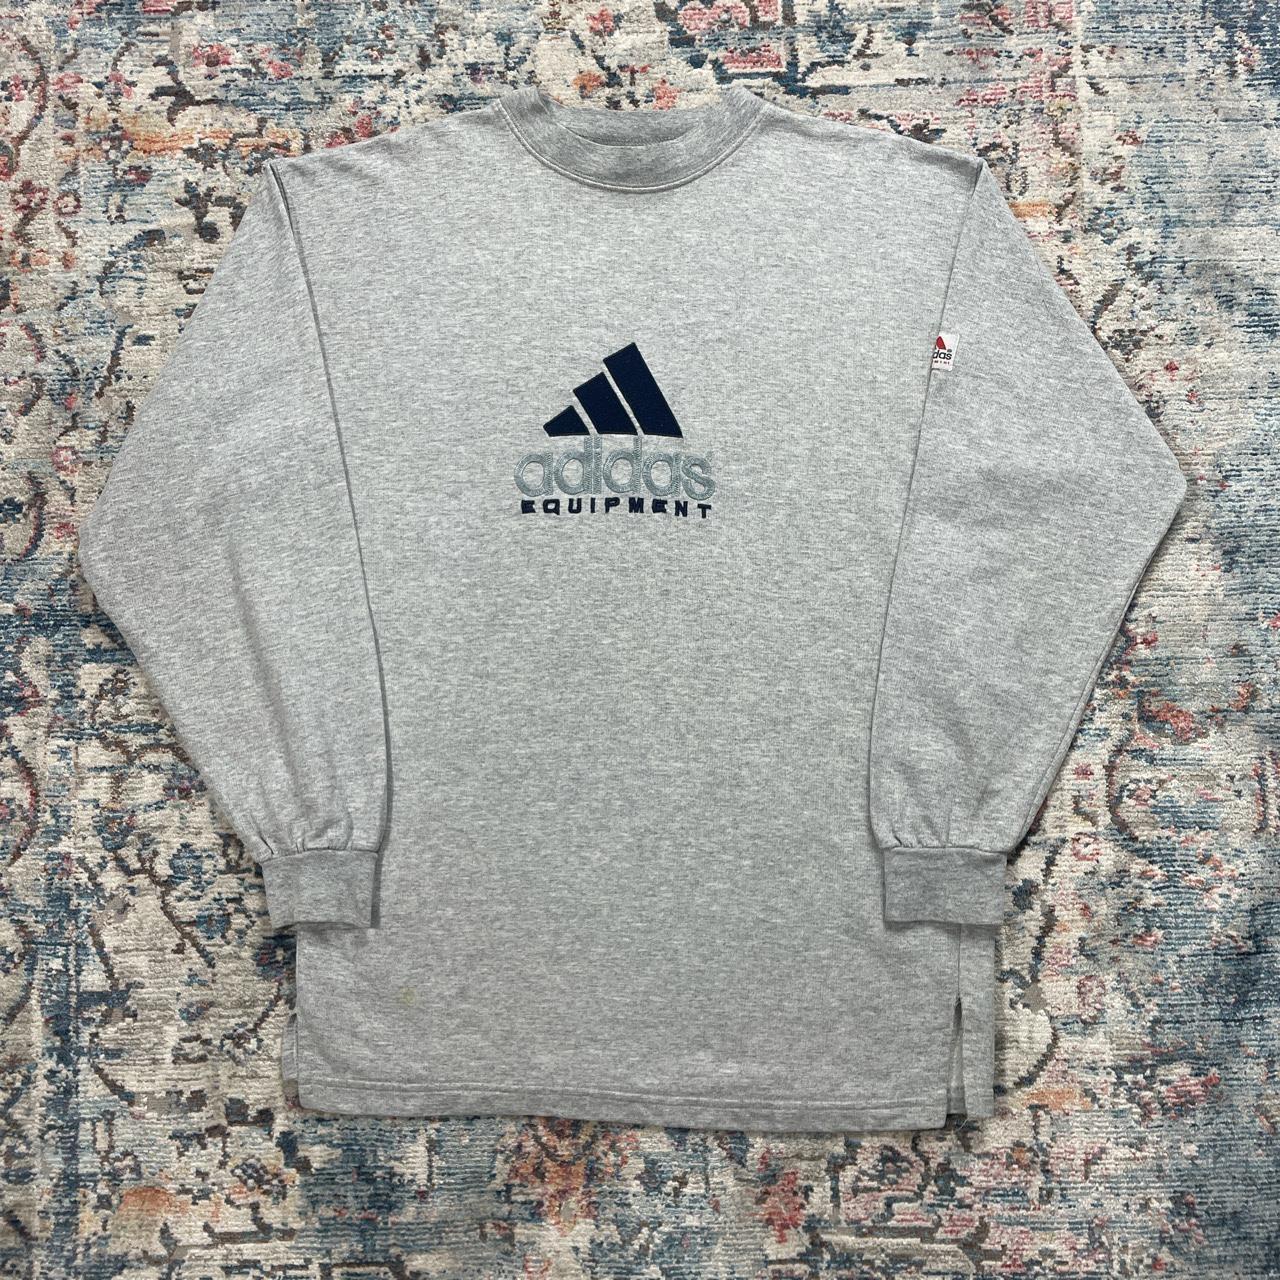 Vintage Adidas Equipment Grey Sweatshirt